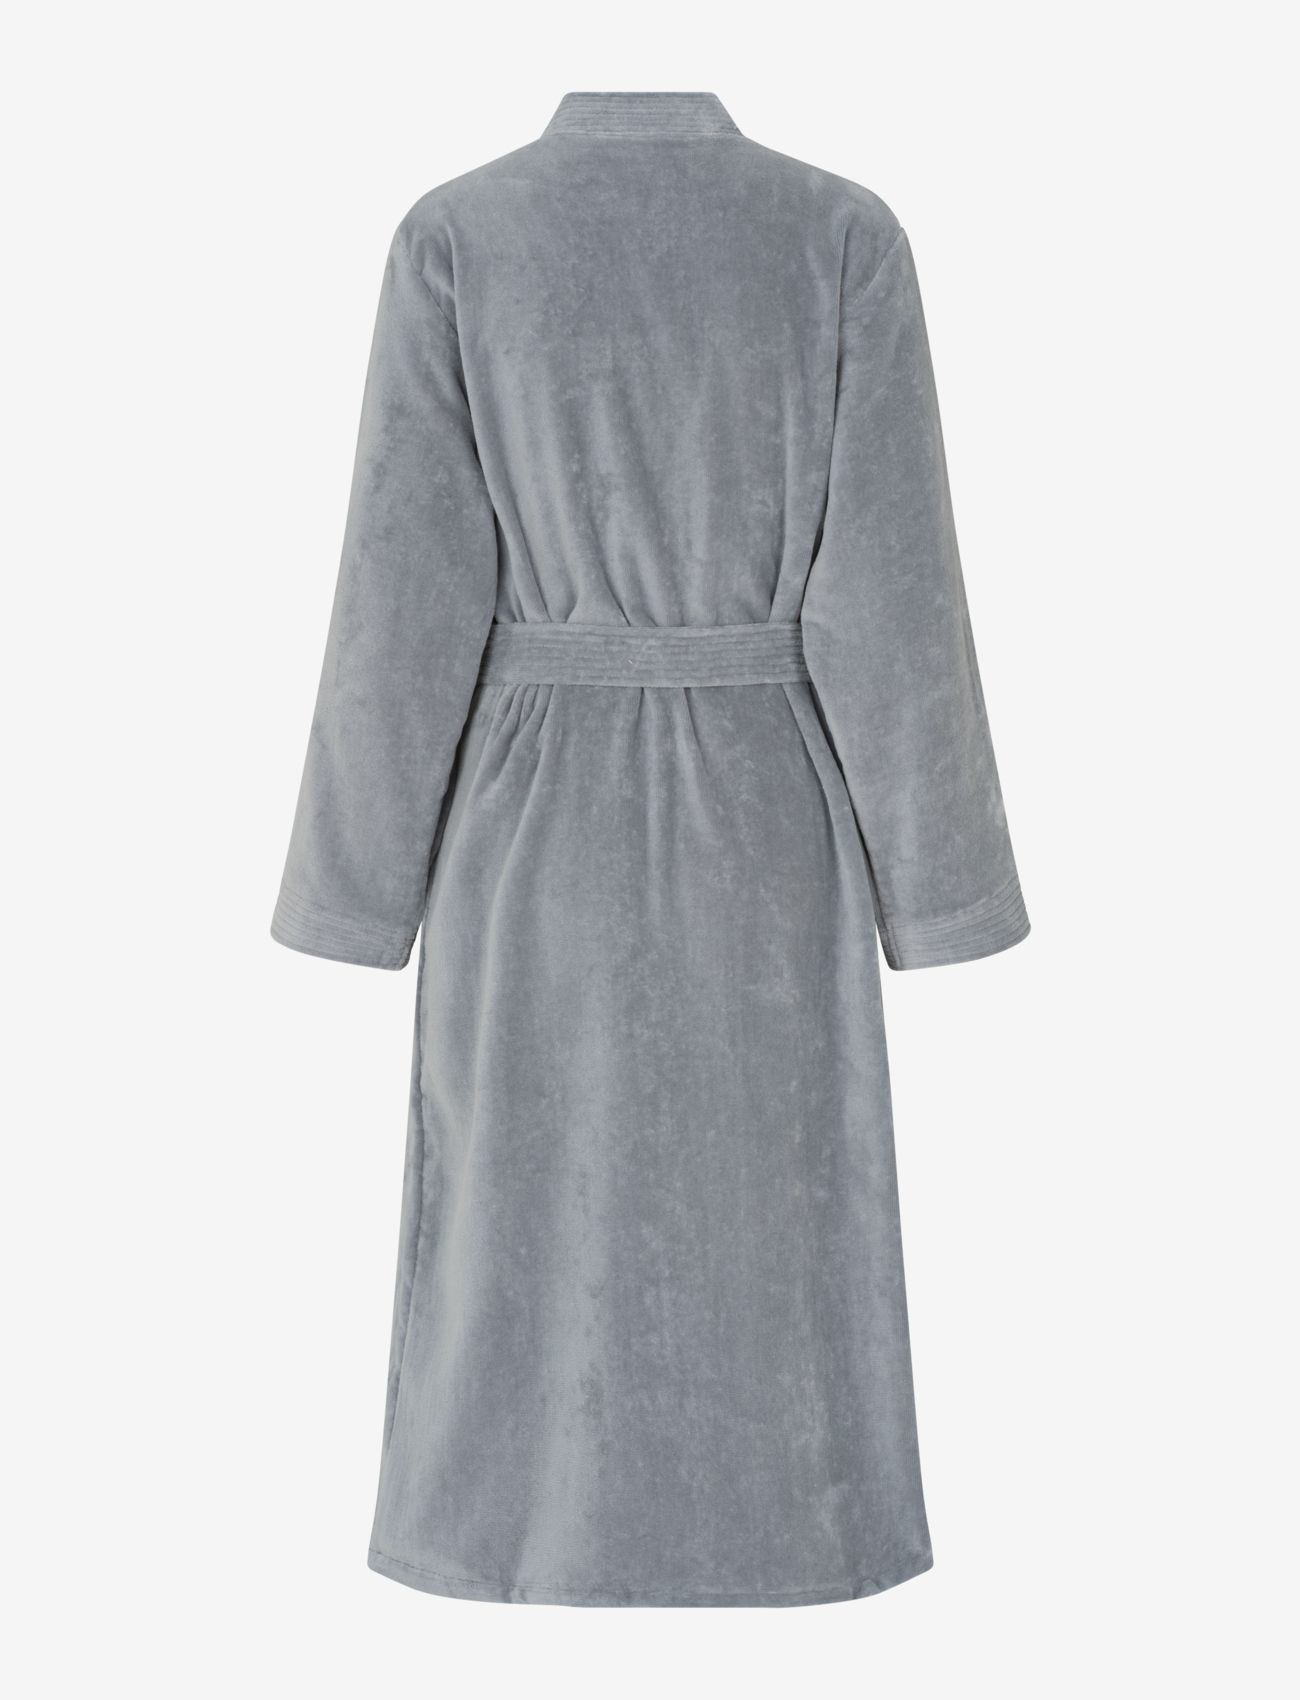 Rosemunde - Organic robe - geburtstagsgeschenke - charcoal grey - 1